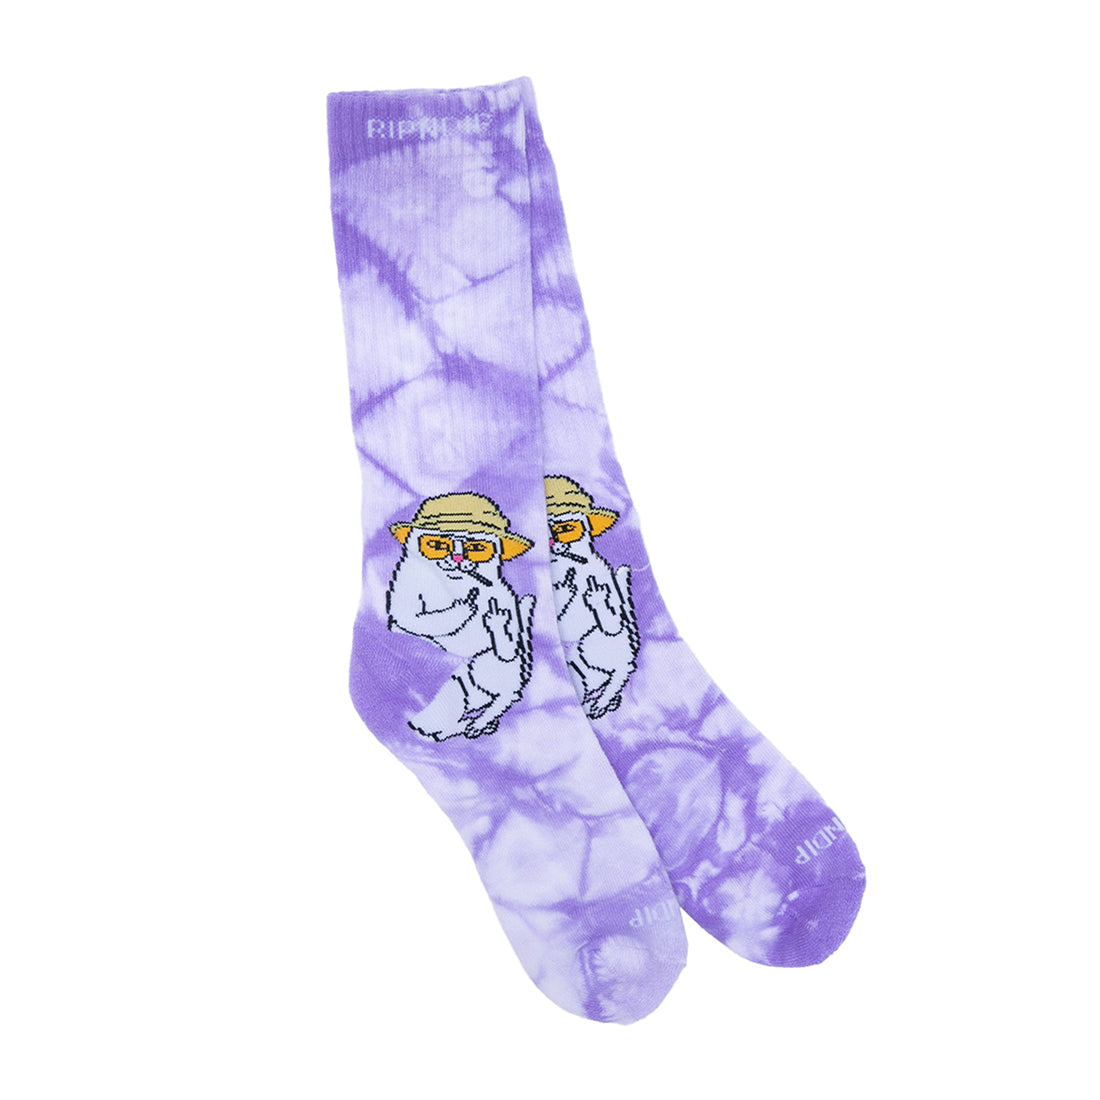 Rip N' Dip Unisex Socks - Nermal S Thompson Socks - Lavender